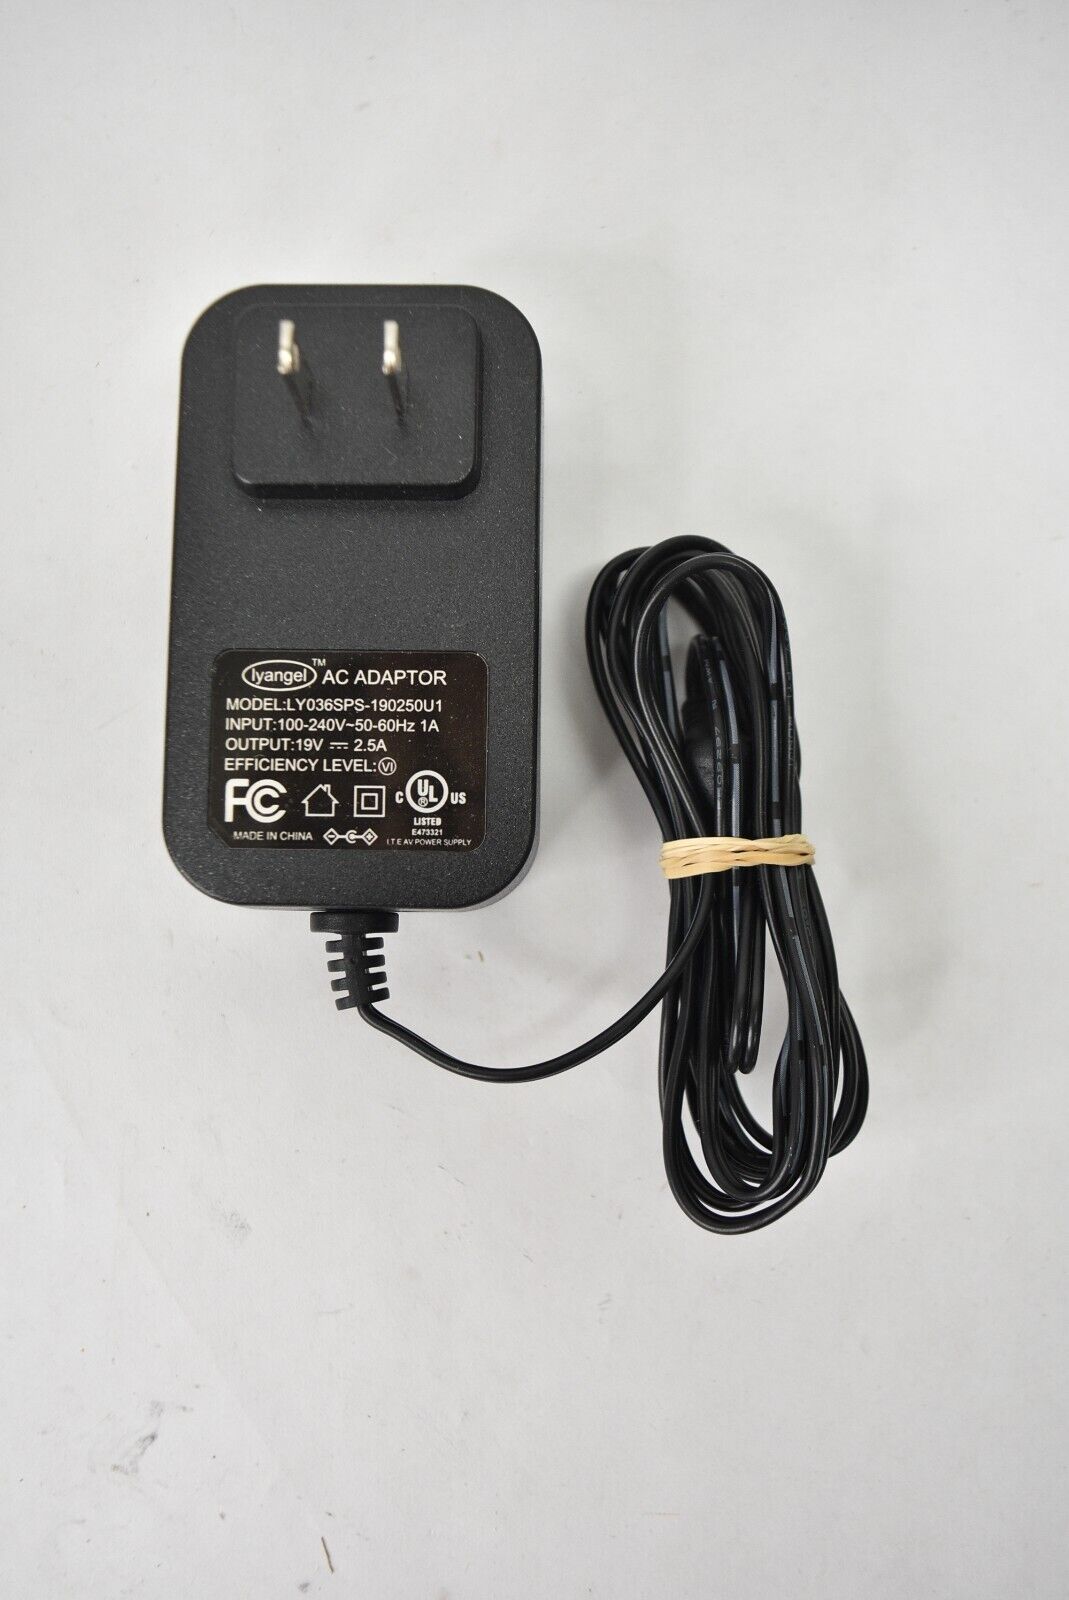 Lyangel AC Adapter Power Supply Unit LY036SPS-190250U1 19V 2.5A Brand: Lyangel Type: Adapter Output Voltage: 19 V